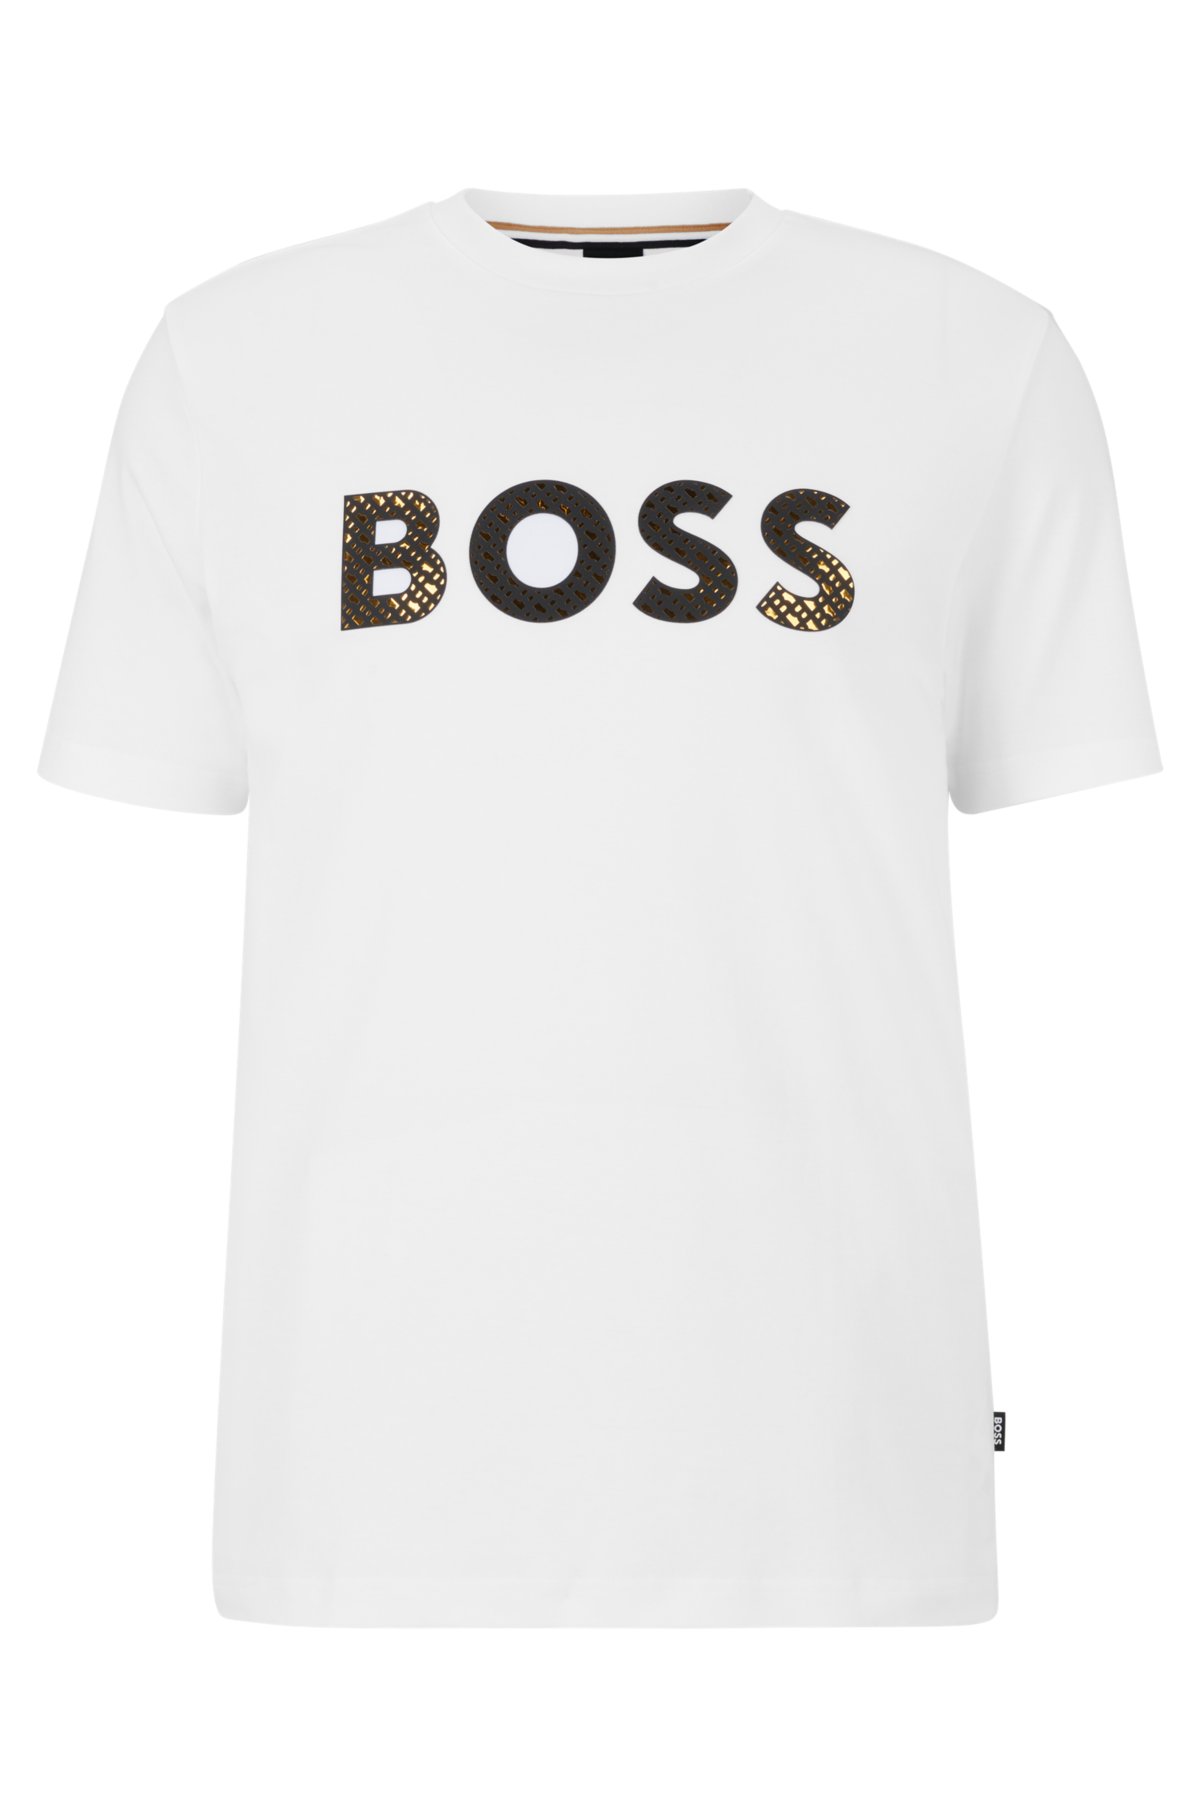 BOSS - Slim-fit shirt with flock-print monograms